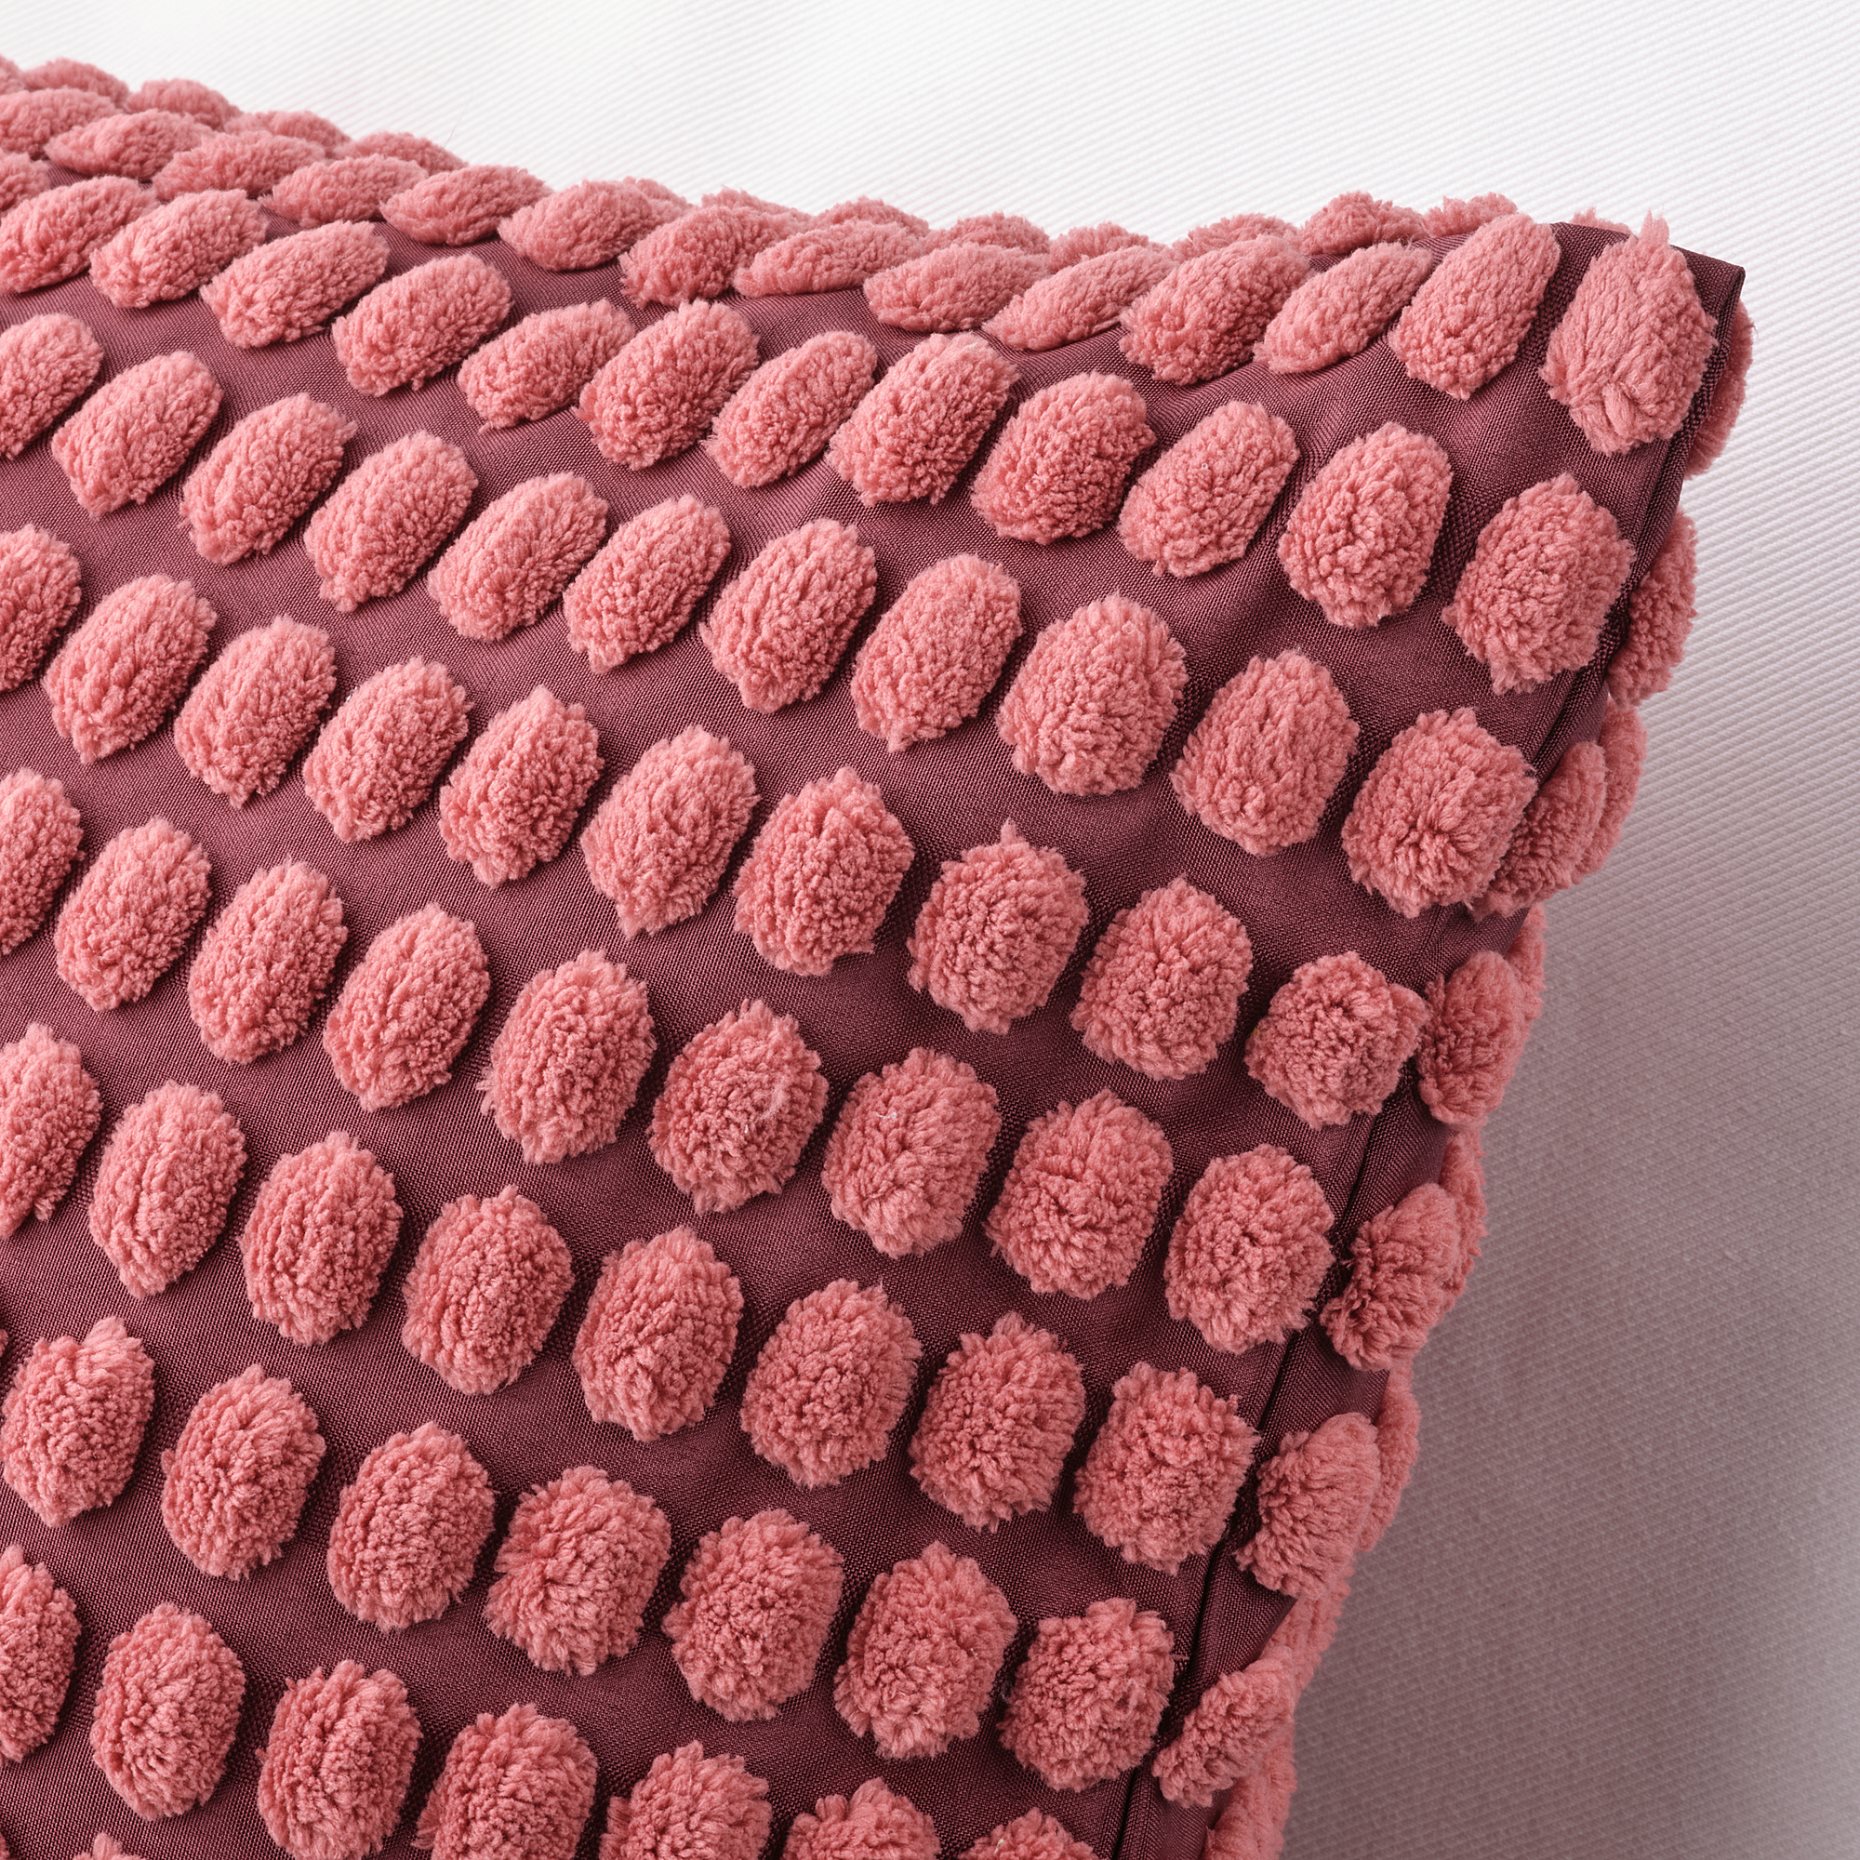 SVARTPOPPEL, cushion cover, 65x65 cm, 105.430.25